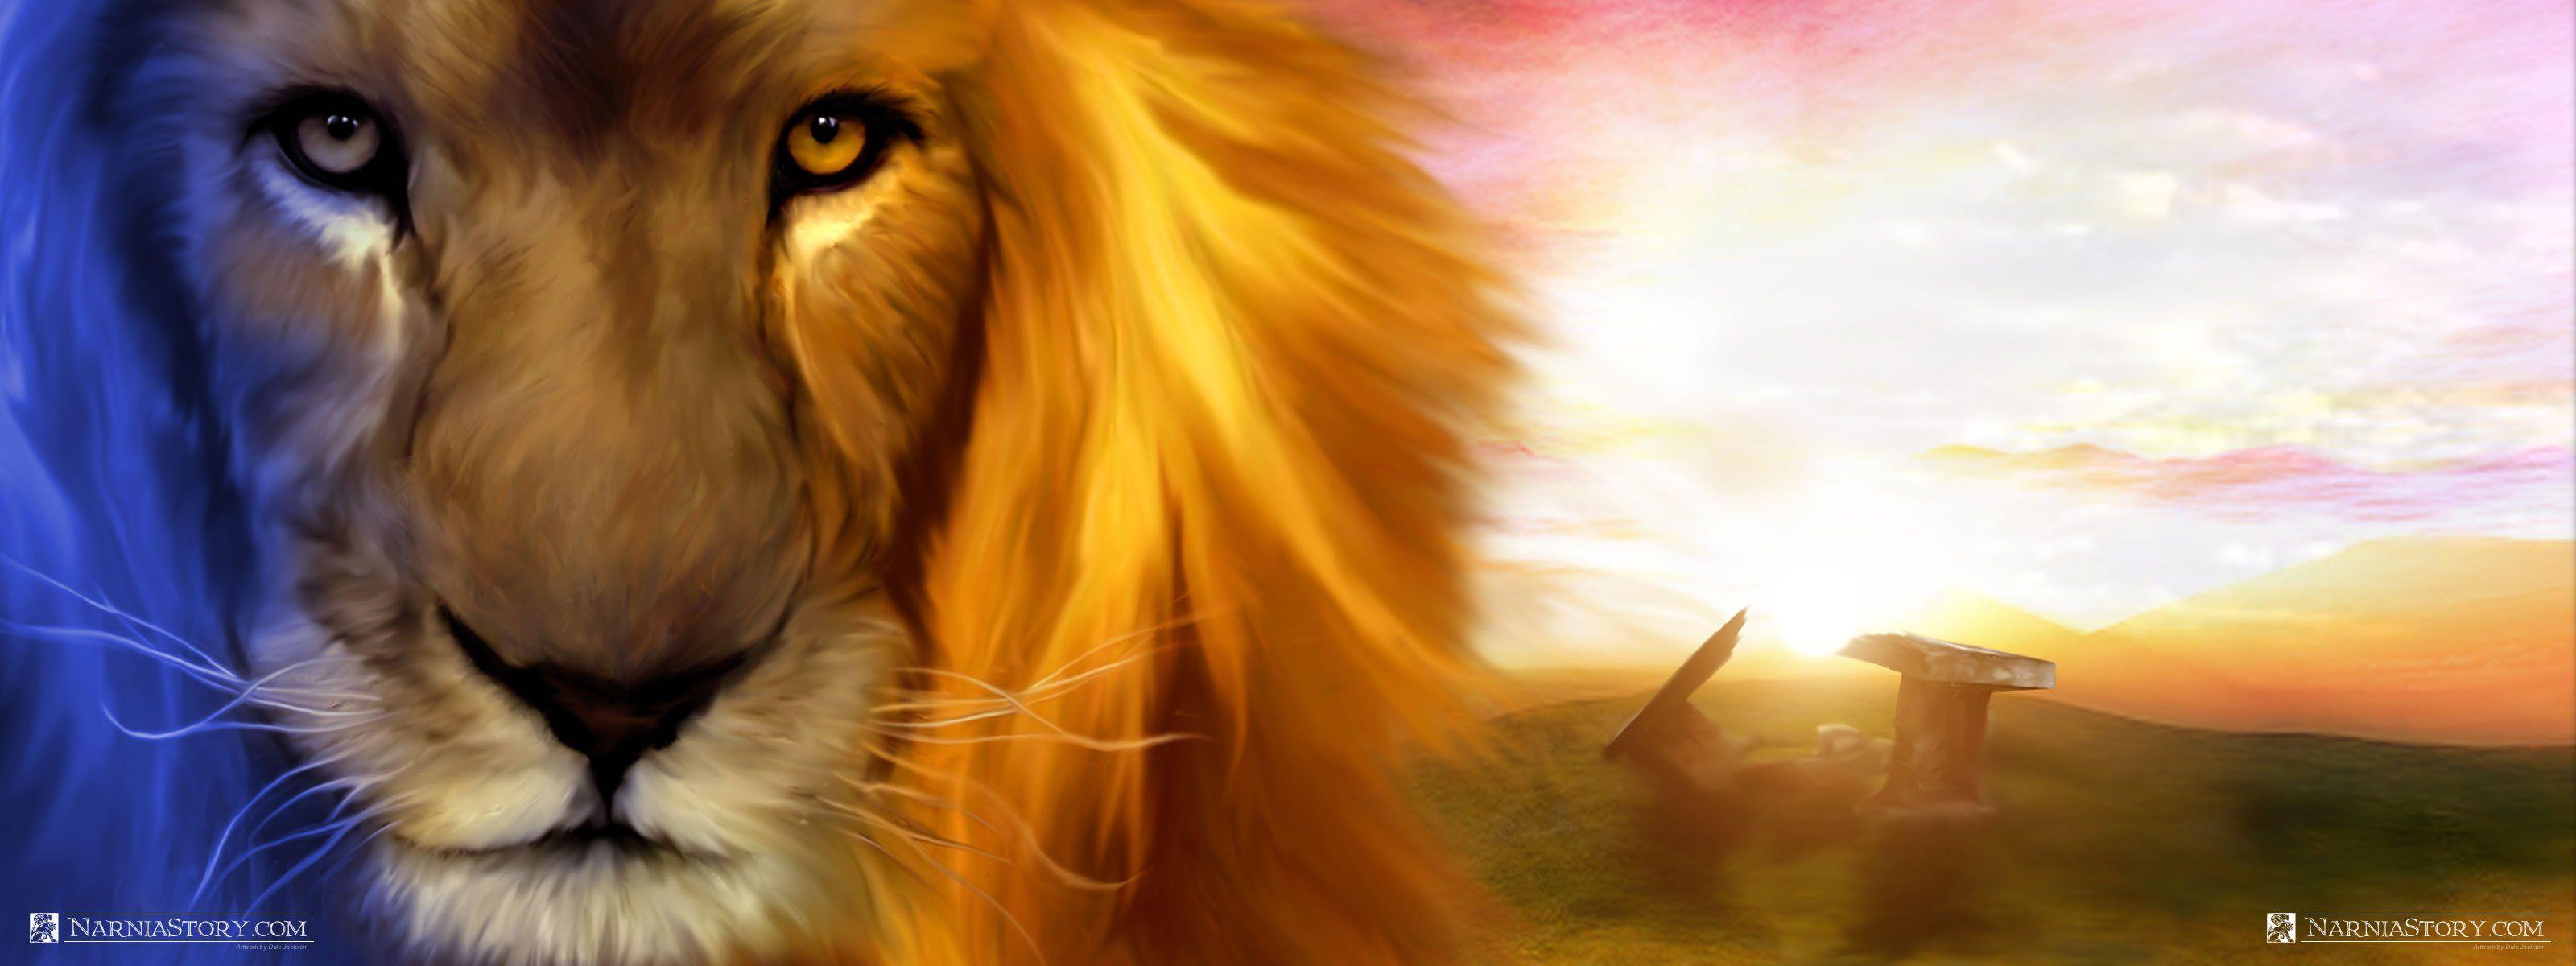 Lion Wallpapers: Free HD Download [500+ HQ] | Unsplash